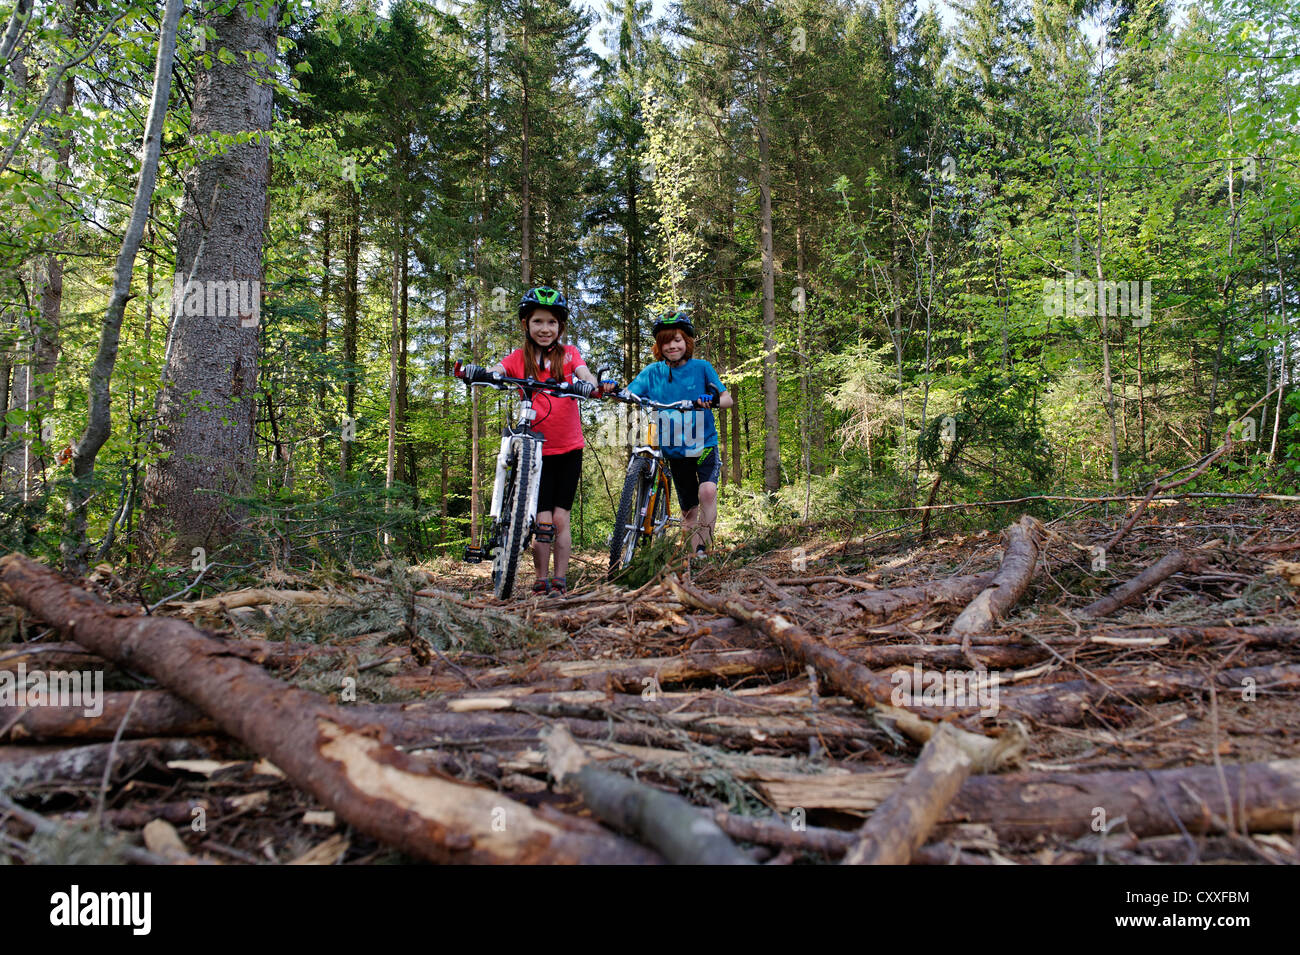 Children riding their bicycles, pushing their bikes across roots, mountain biking tour near Dietramszell, Toelzer Land region Stock Photo